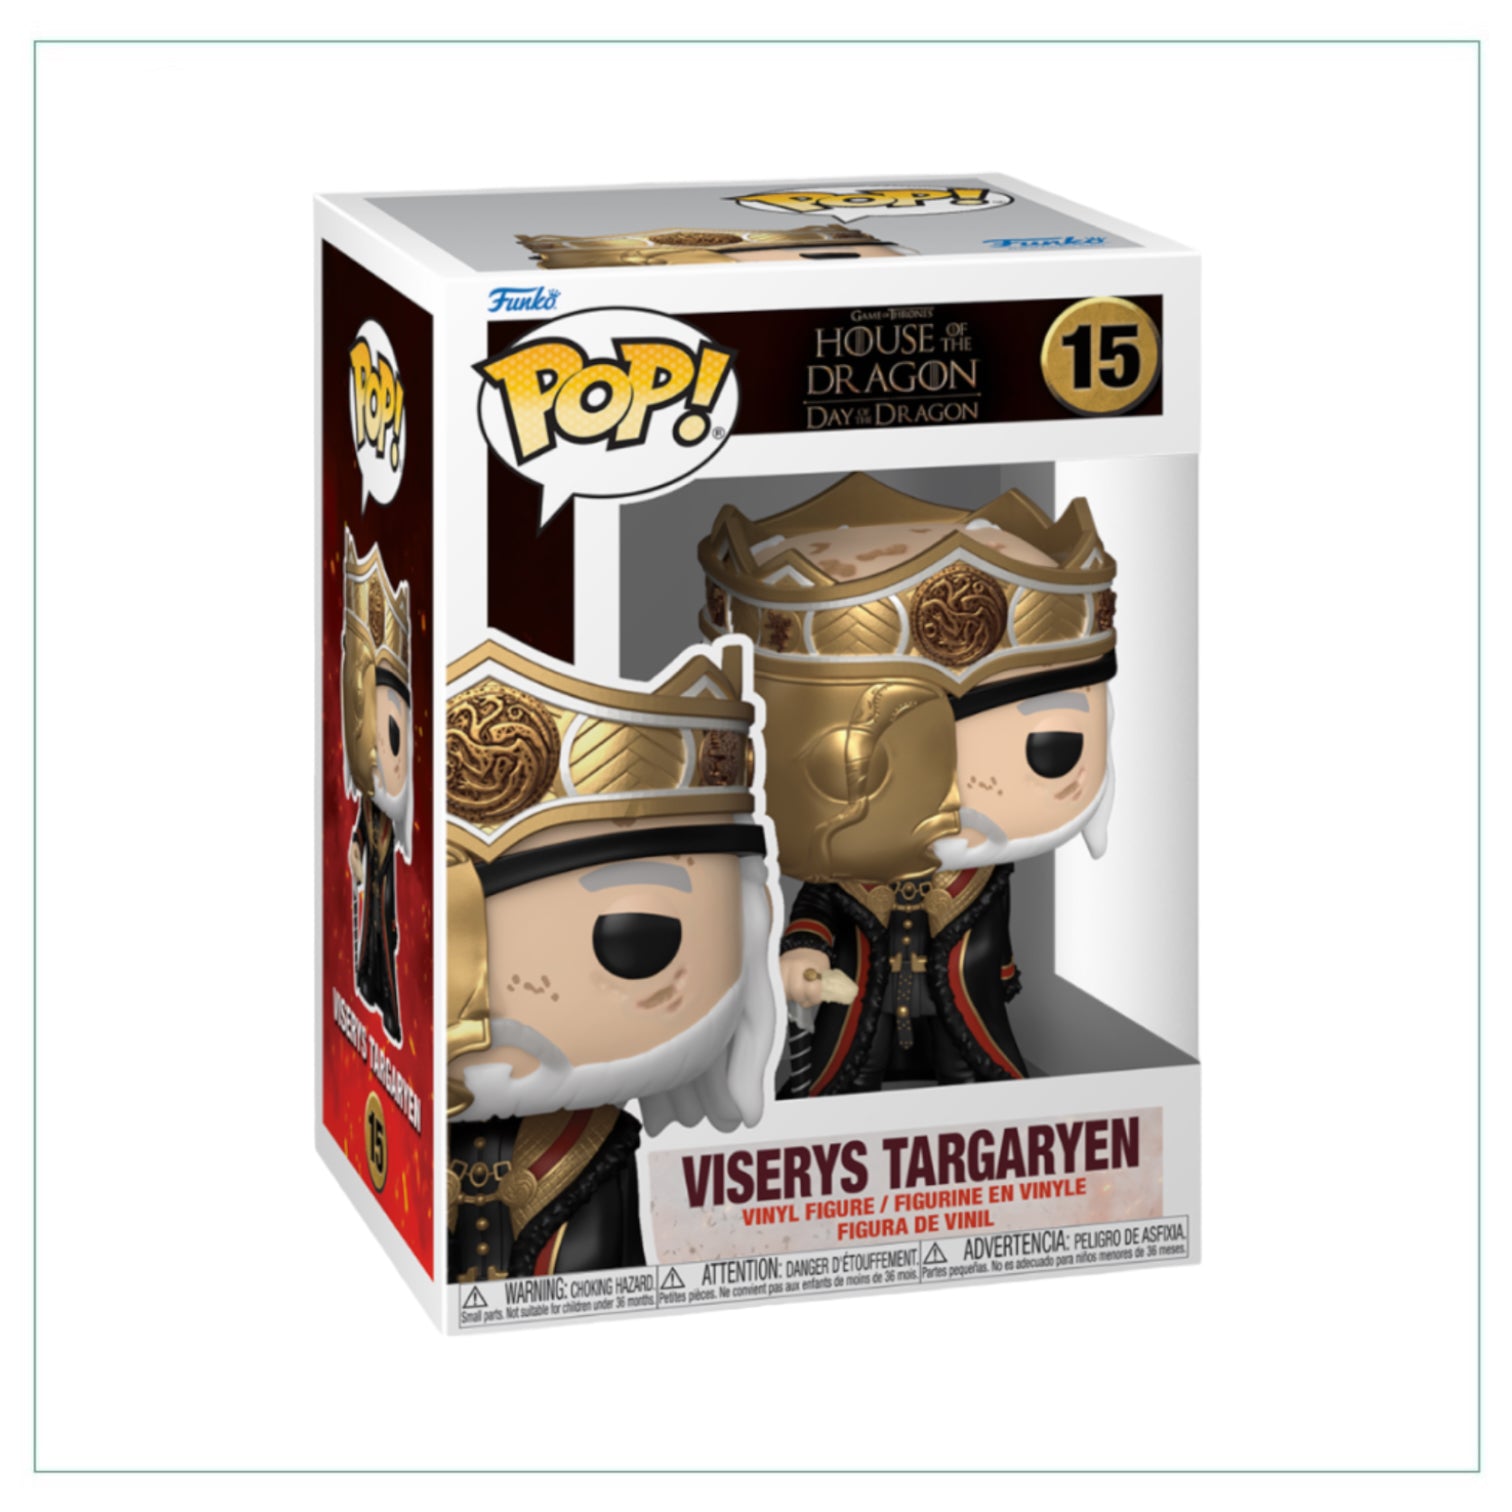 Viserys Targaryen #15 Funko Pop! House of The Dragon